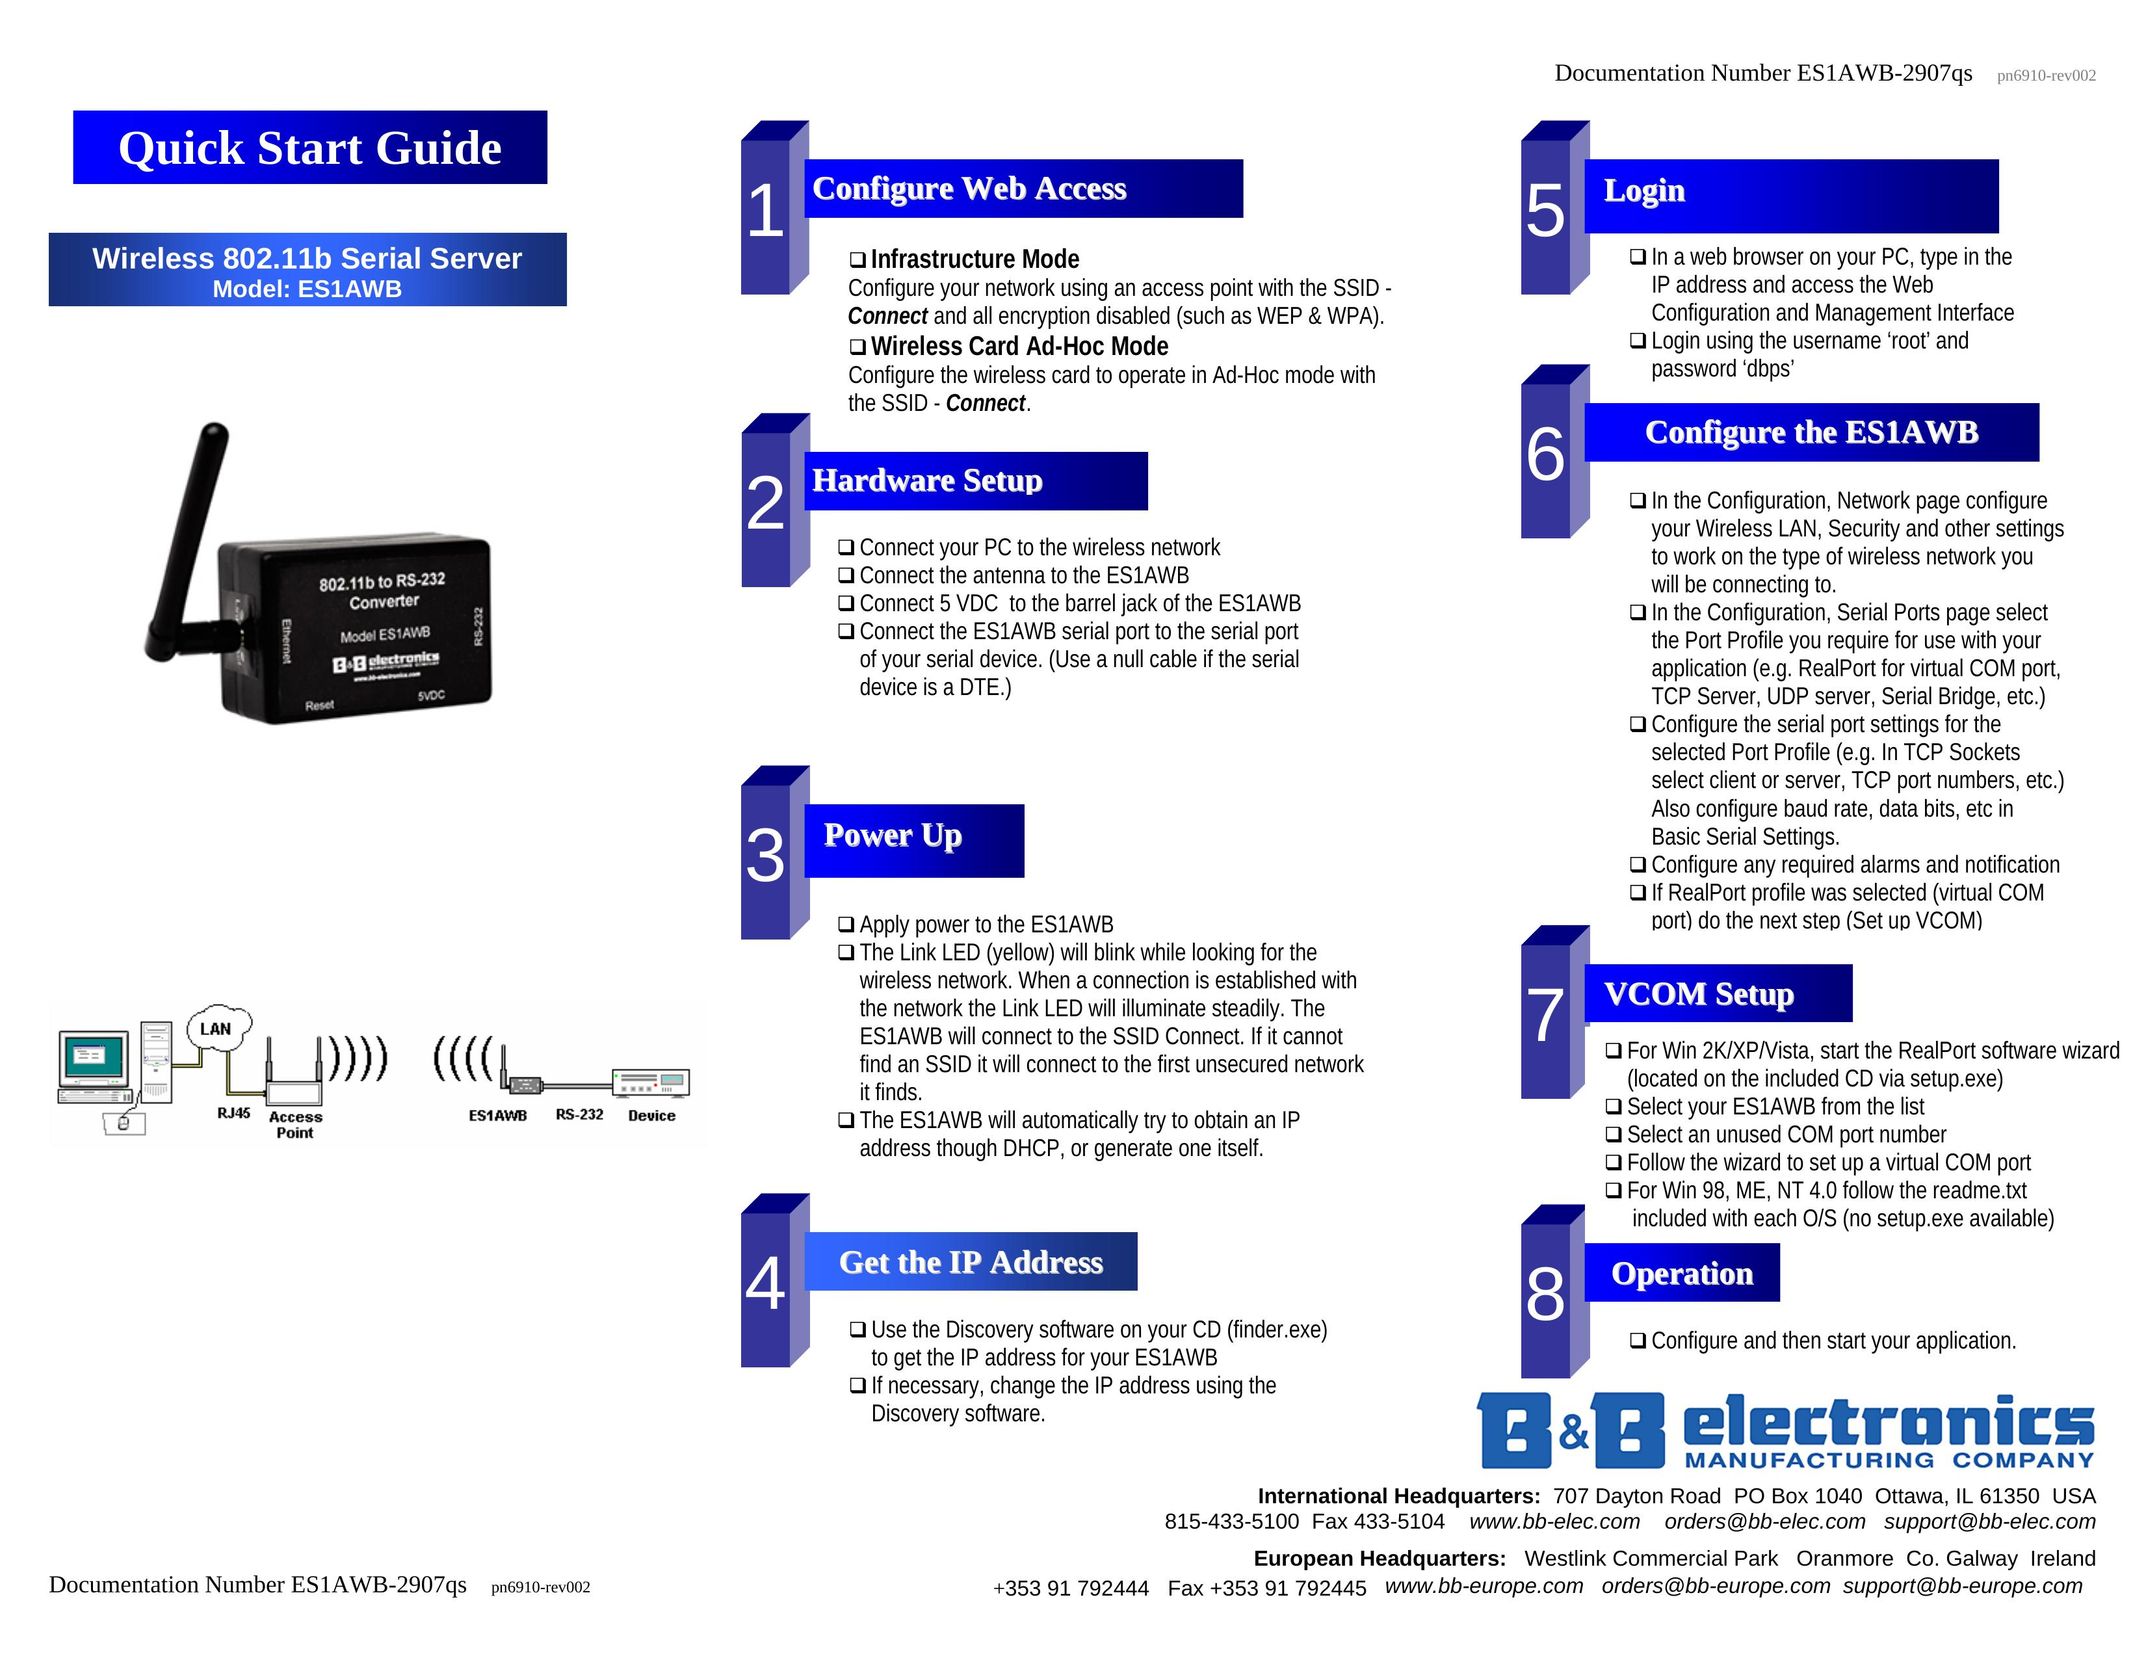 B&B Electronics ES1AWB Network Card User Manual